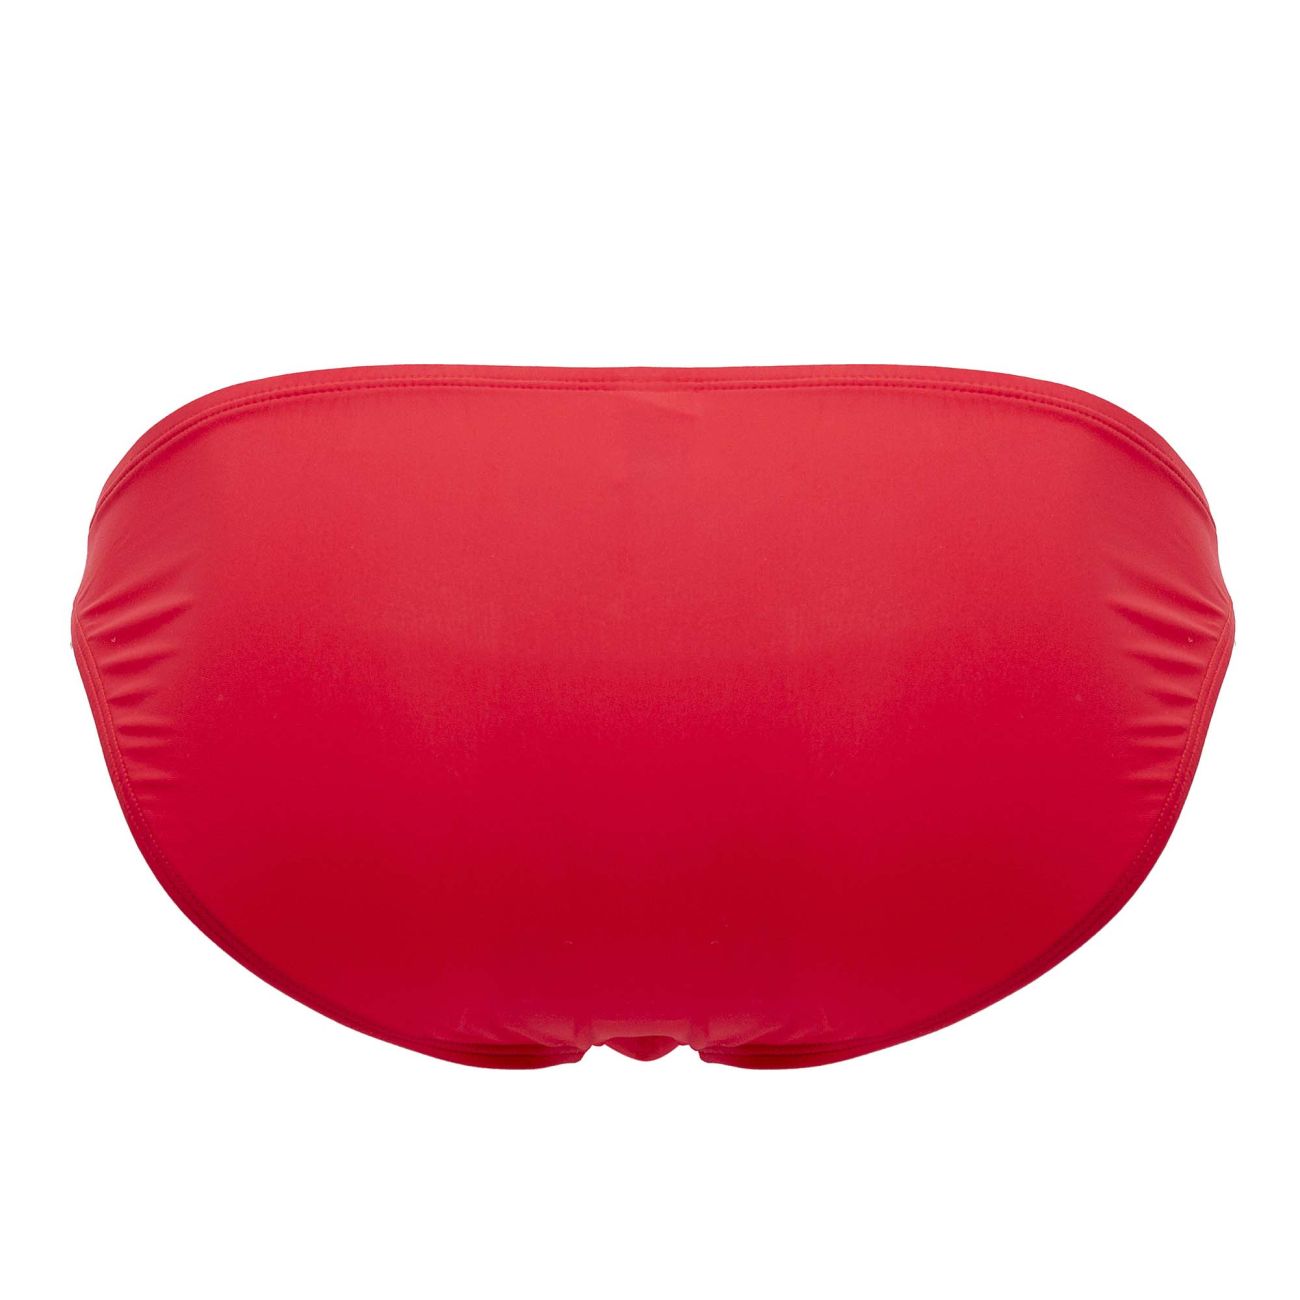 ErgoWear EW1234 X4D Bikini Red